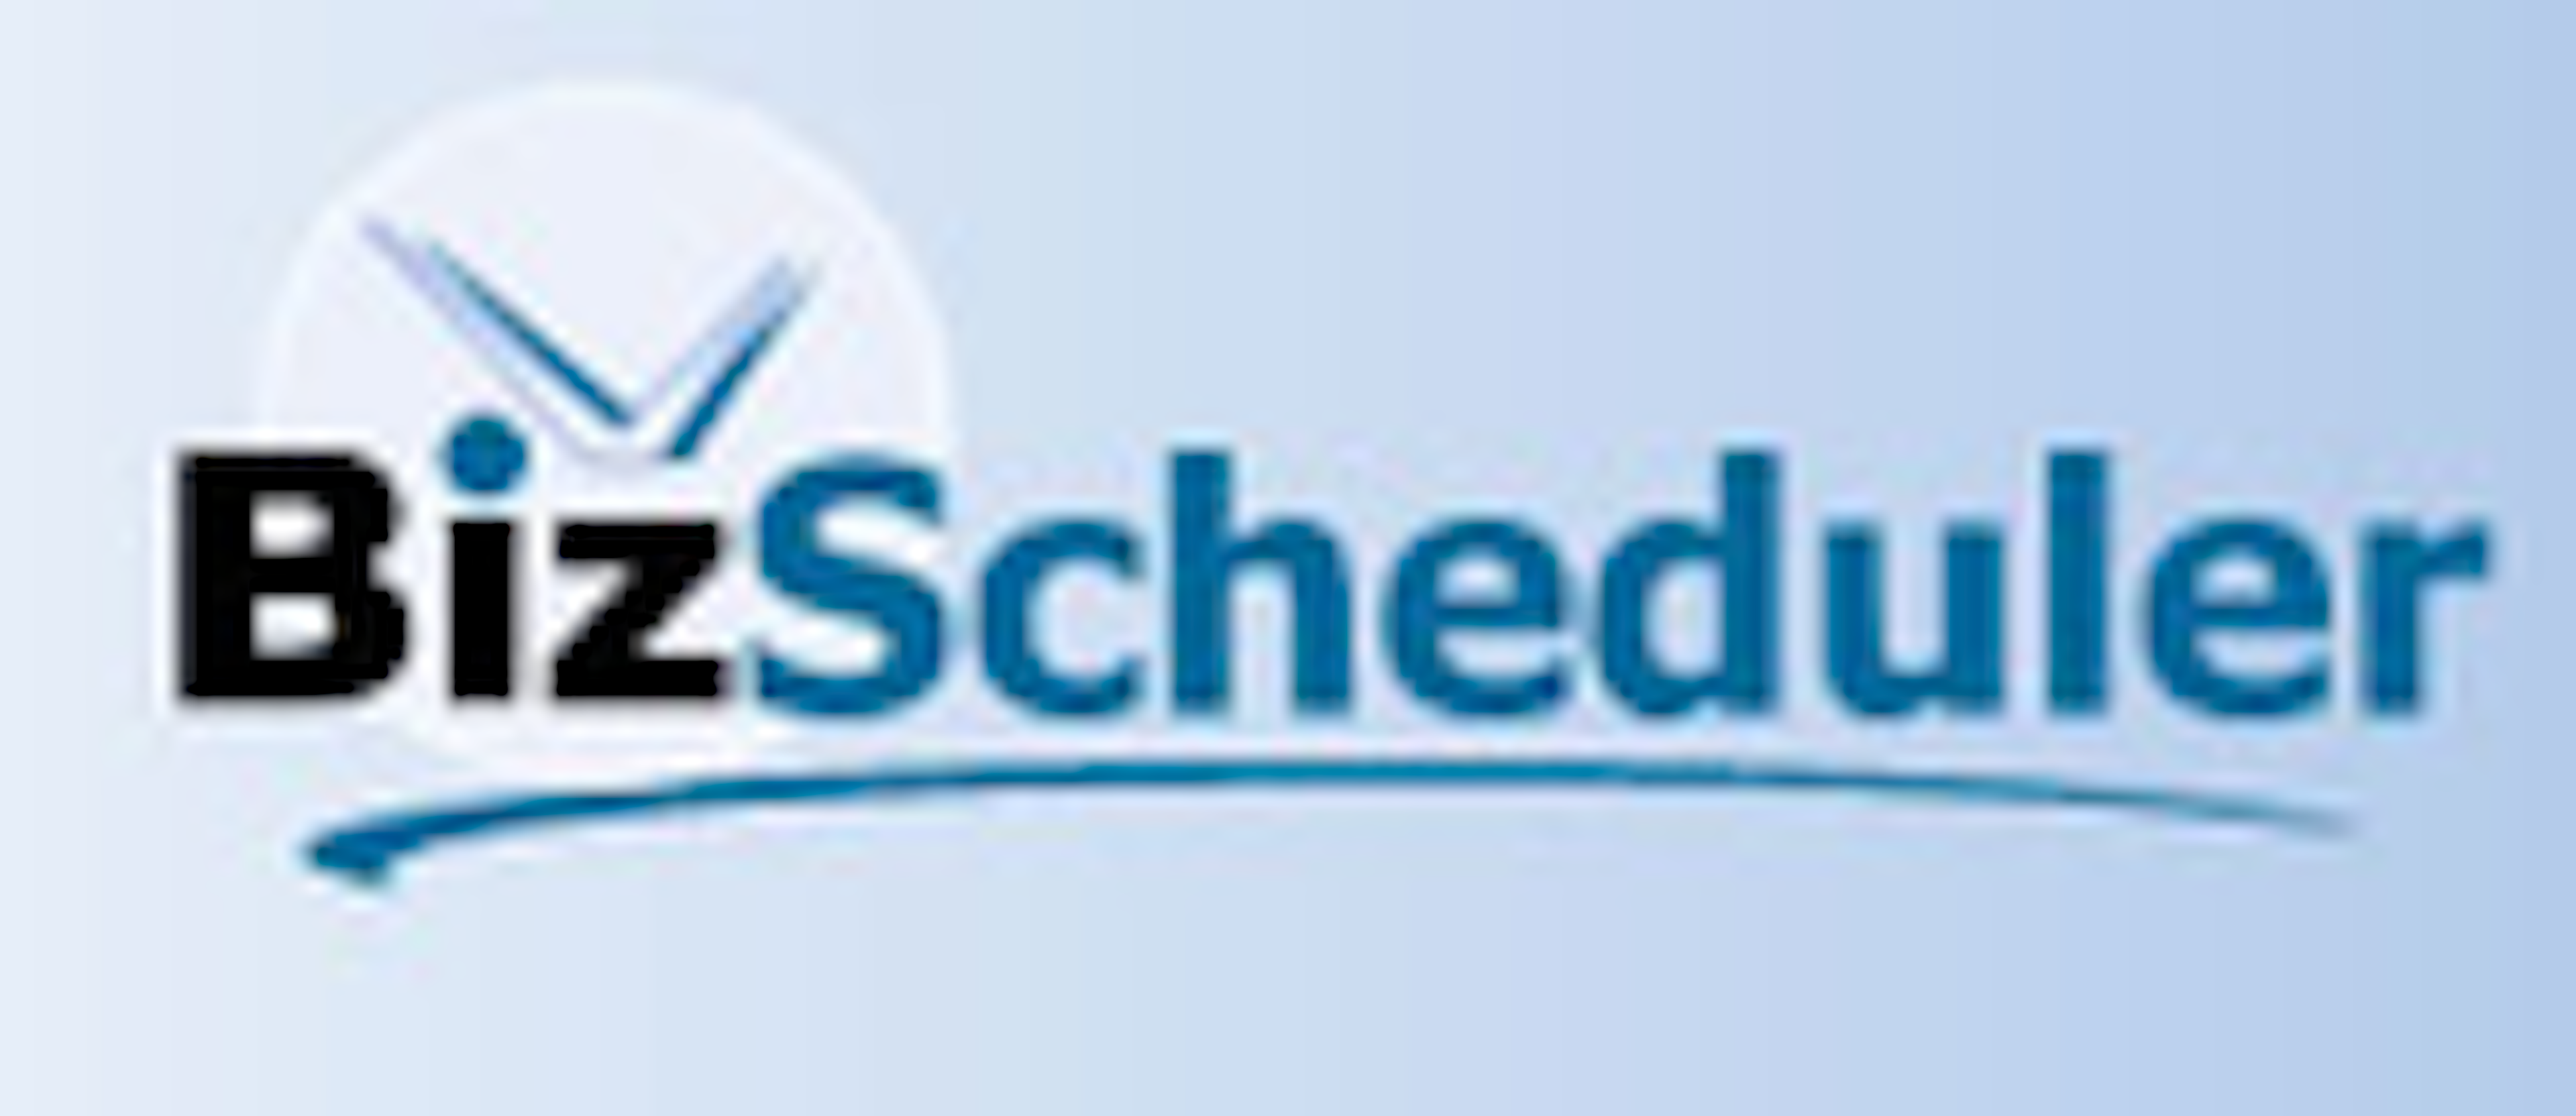 BizScheduler Logo